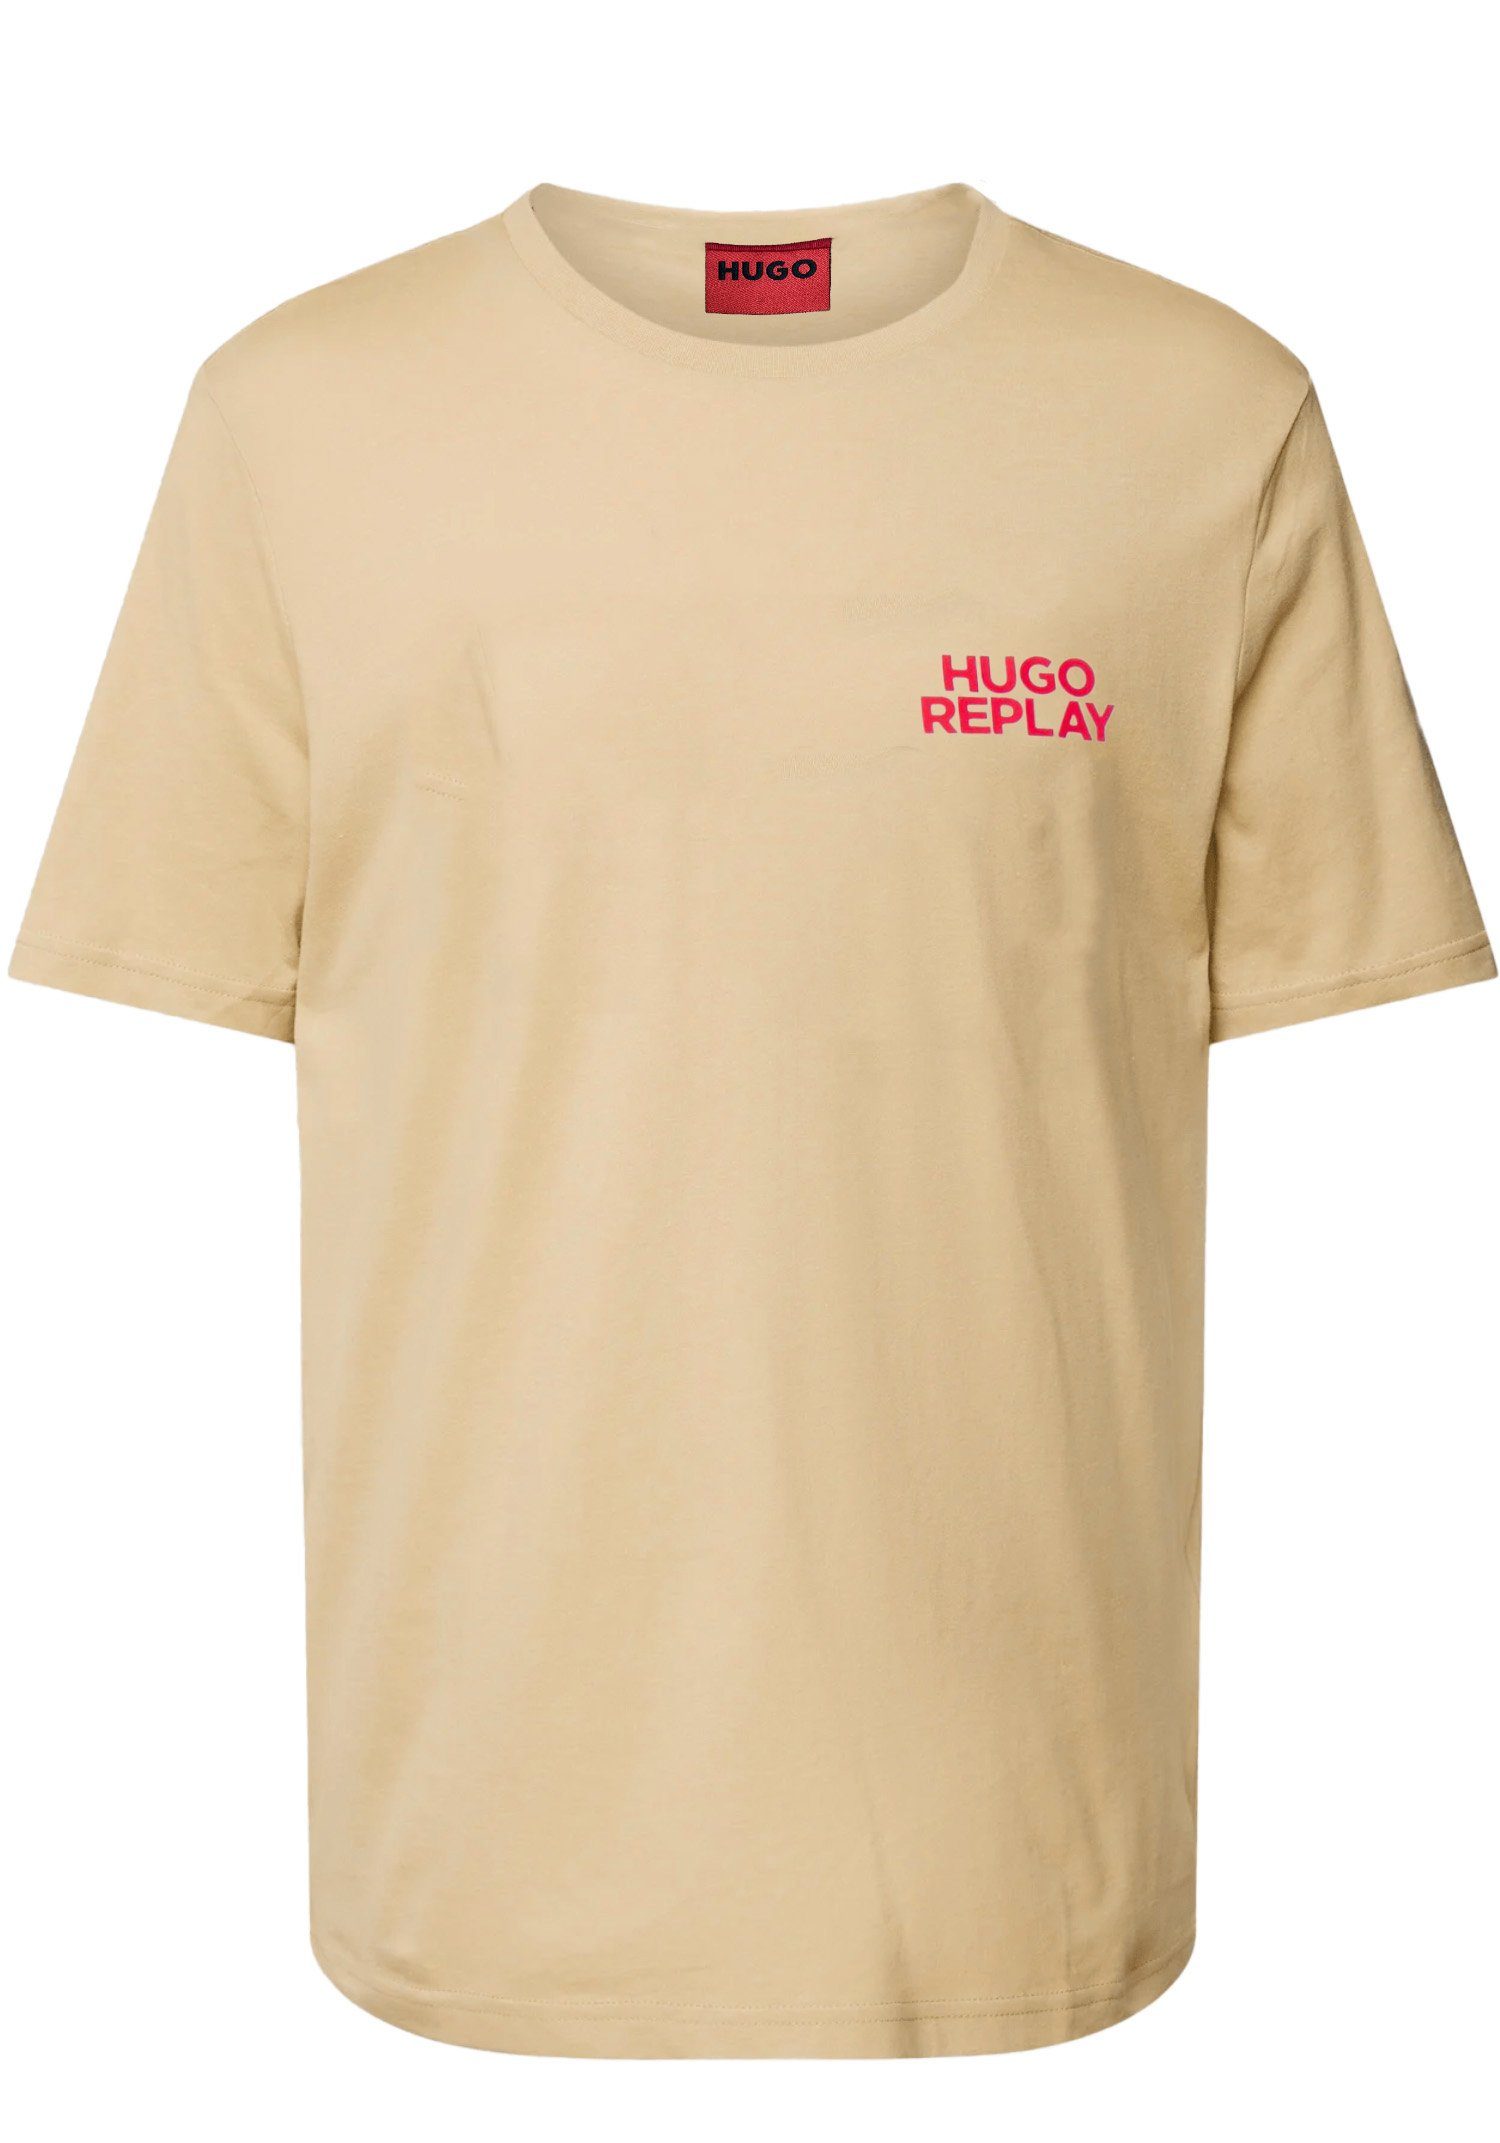 HUGO T-Shirt Hugo Boss Replay Herren Shirt mit Logo auf der Brust